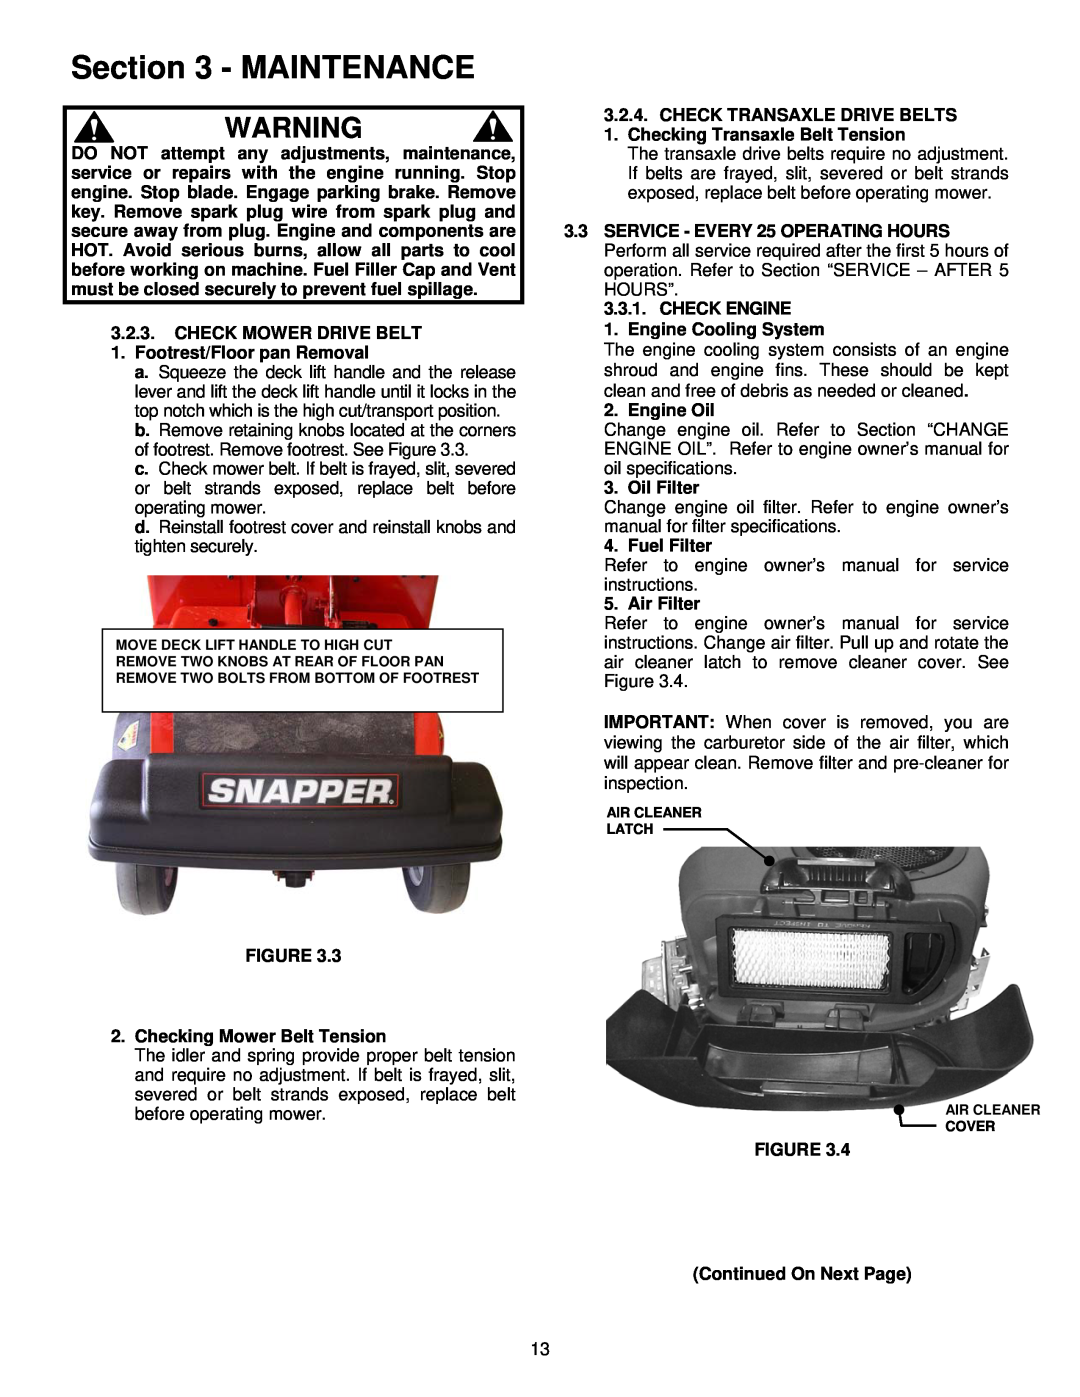 Snapper EYZ16335BVE important safety instructions Maintenance, Checking Mower Belt Tension 